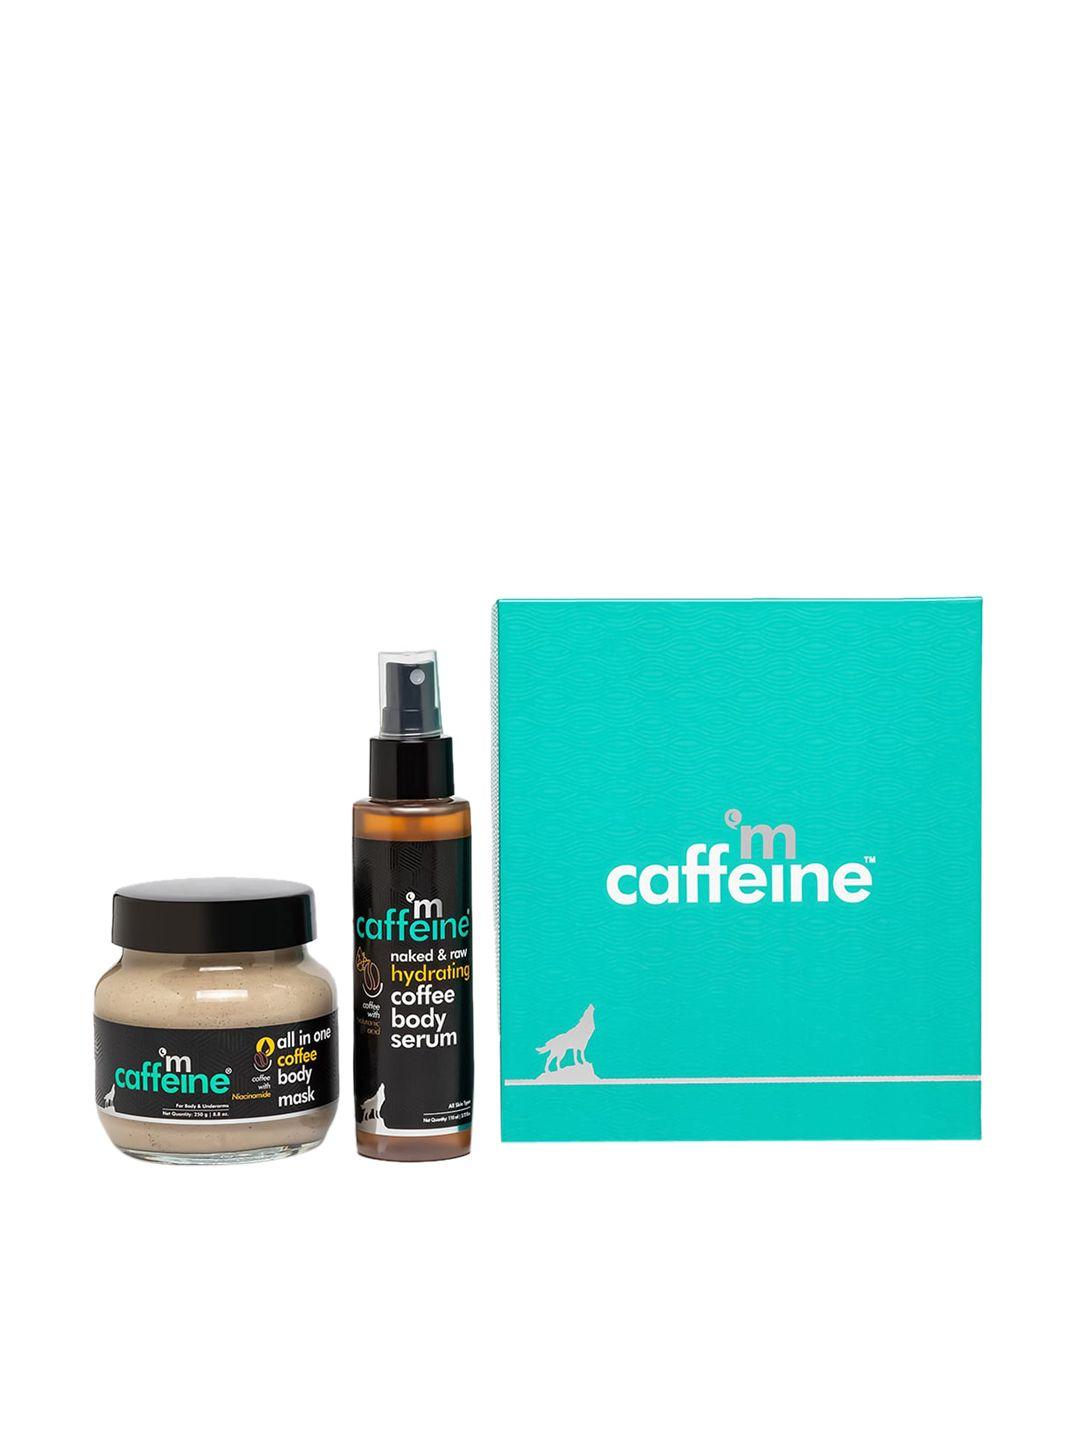 mcaffeine coffee quick glow-up body gift kit